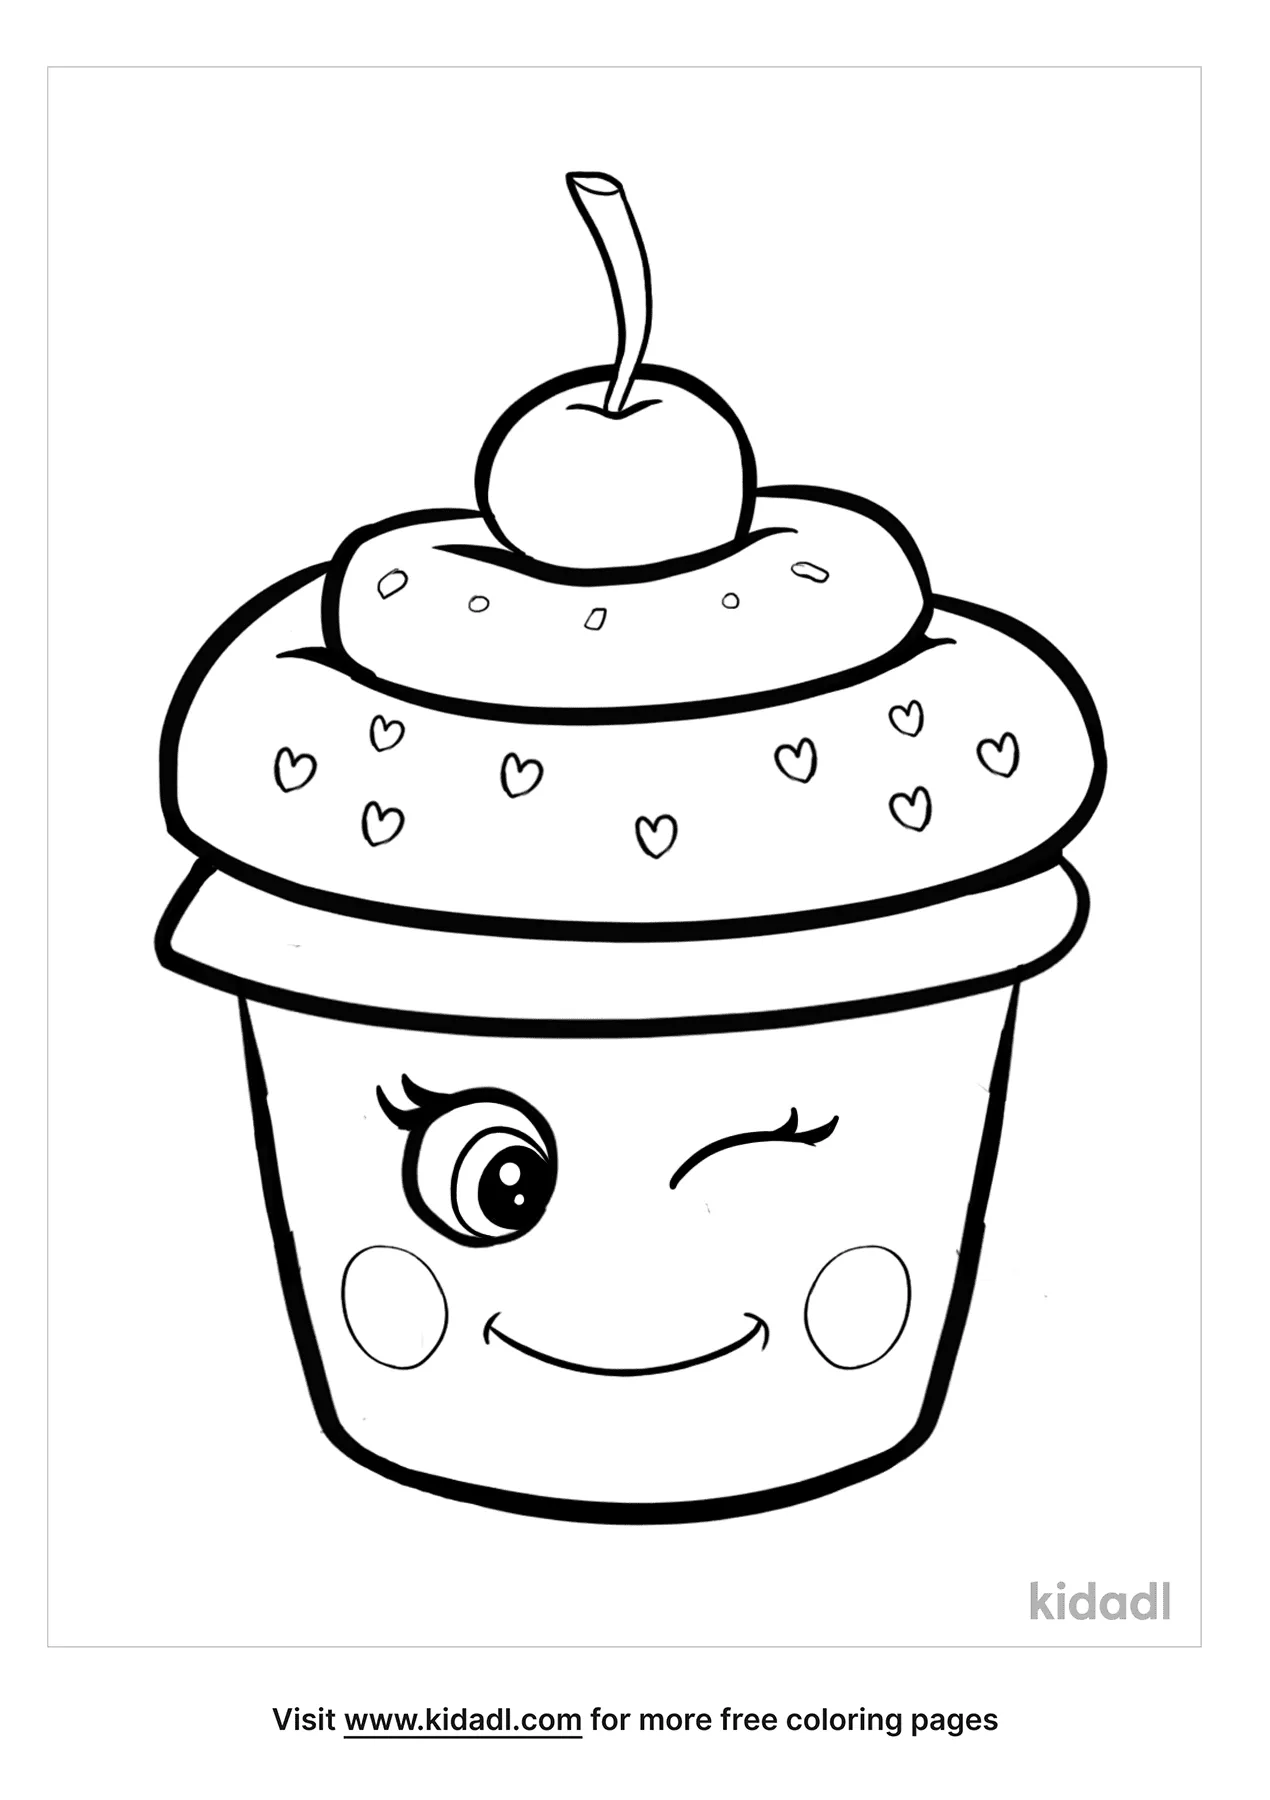 Smily Cartoon Cake Coloring Page